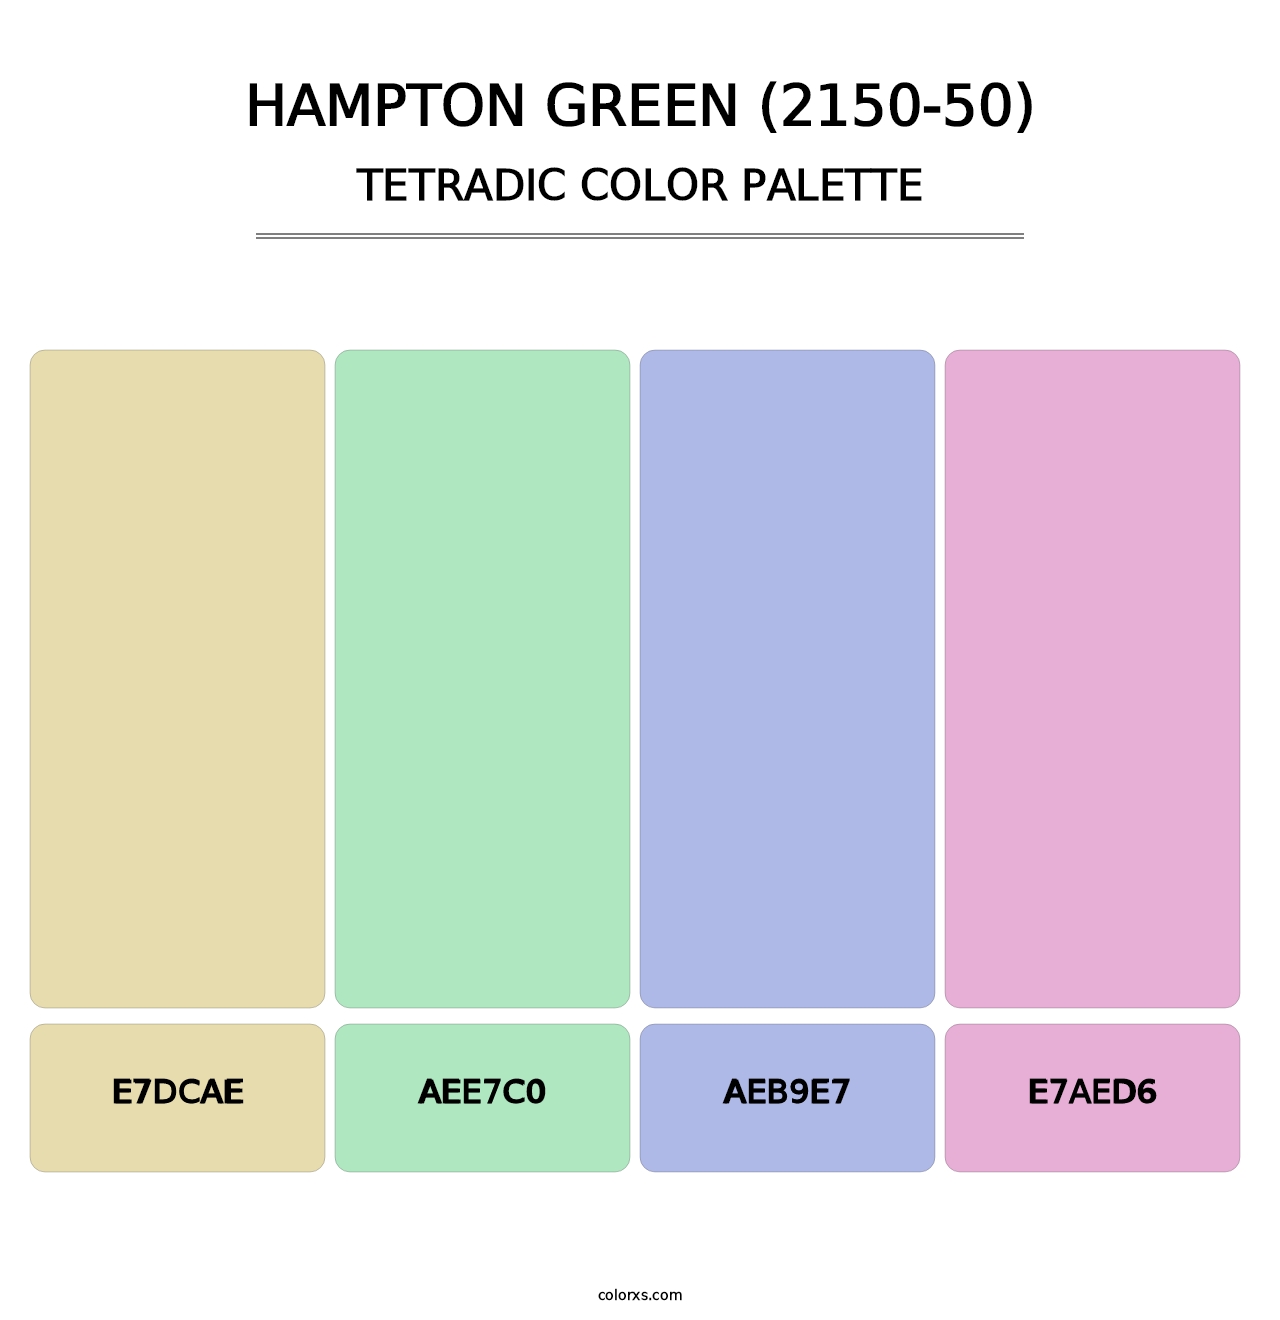 Hampton Green (2150-50) - Tetradic Color Palette